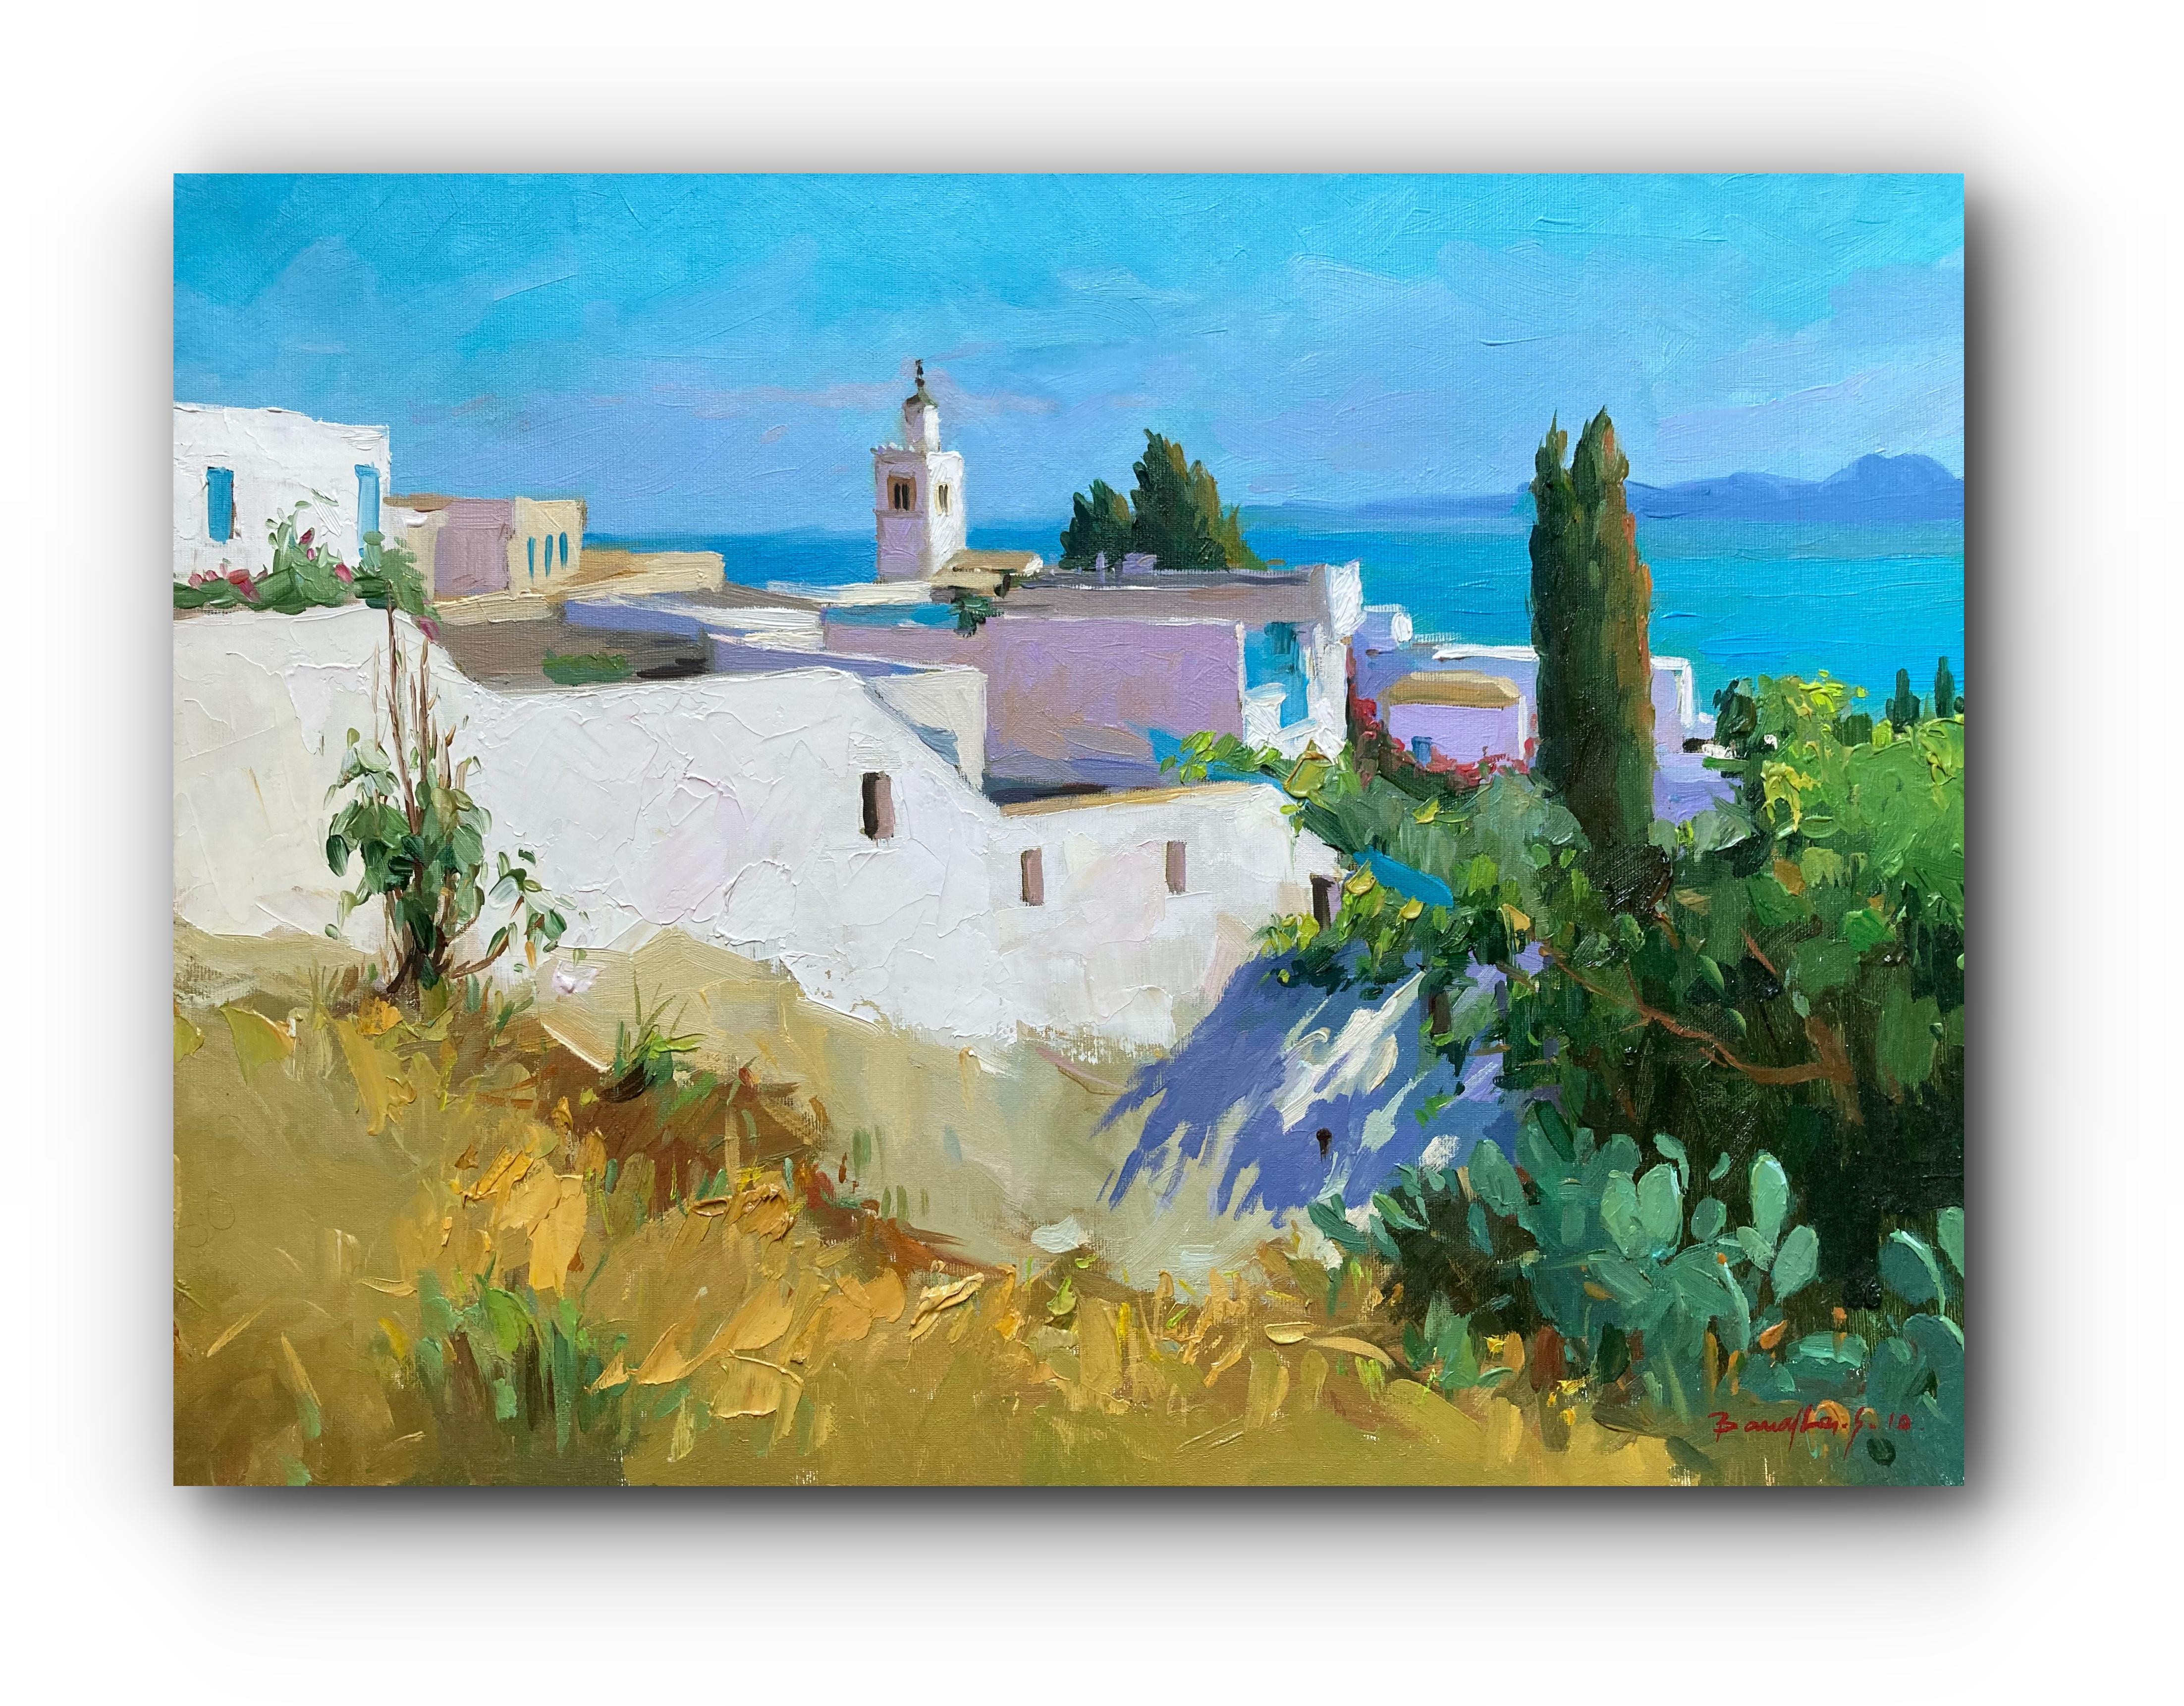 Unknown Landscape Painting - Greece Island Scene (Contemporary Impressionist Landscape Village Painting)